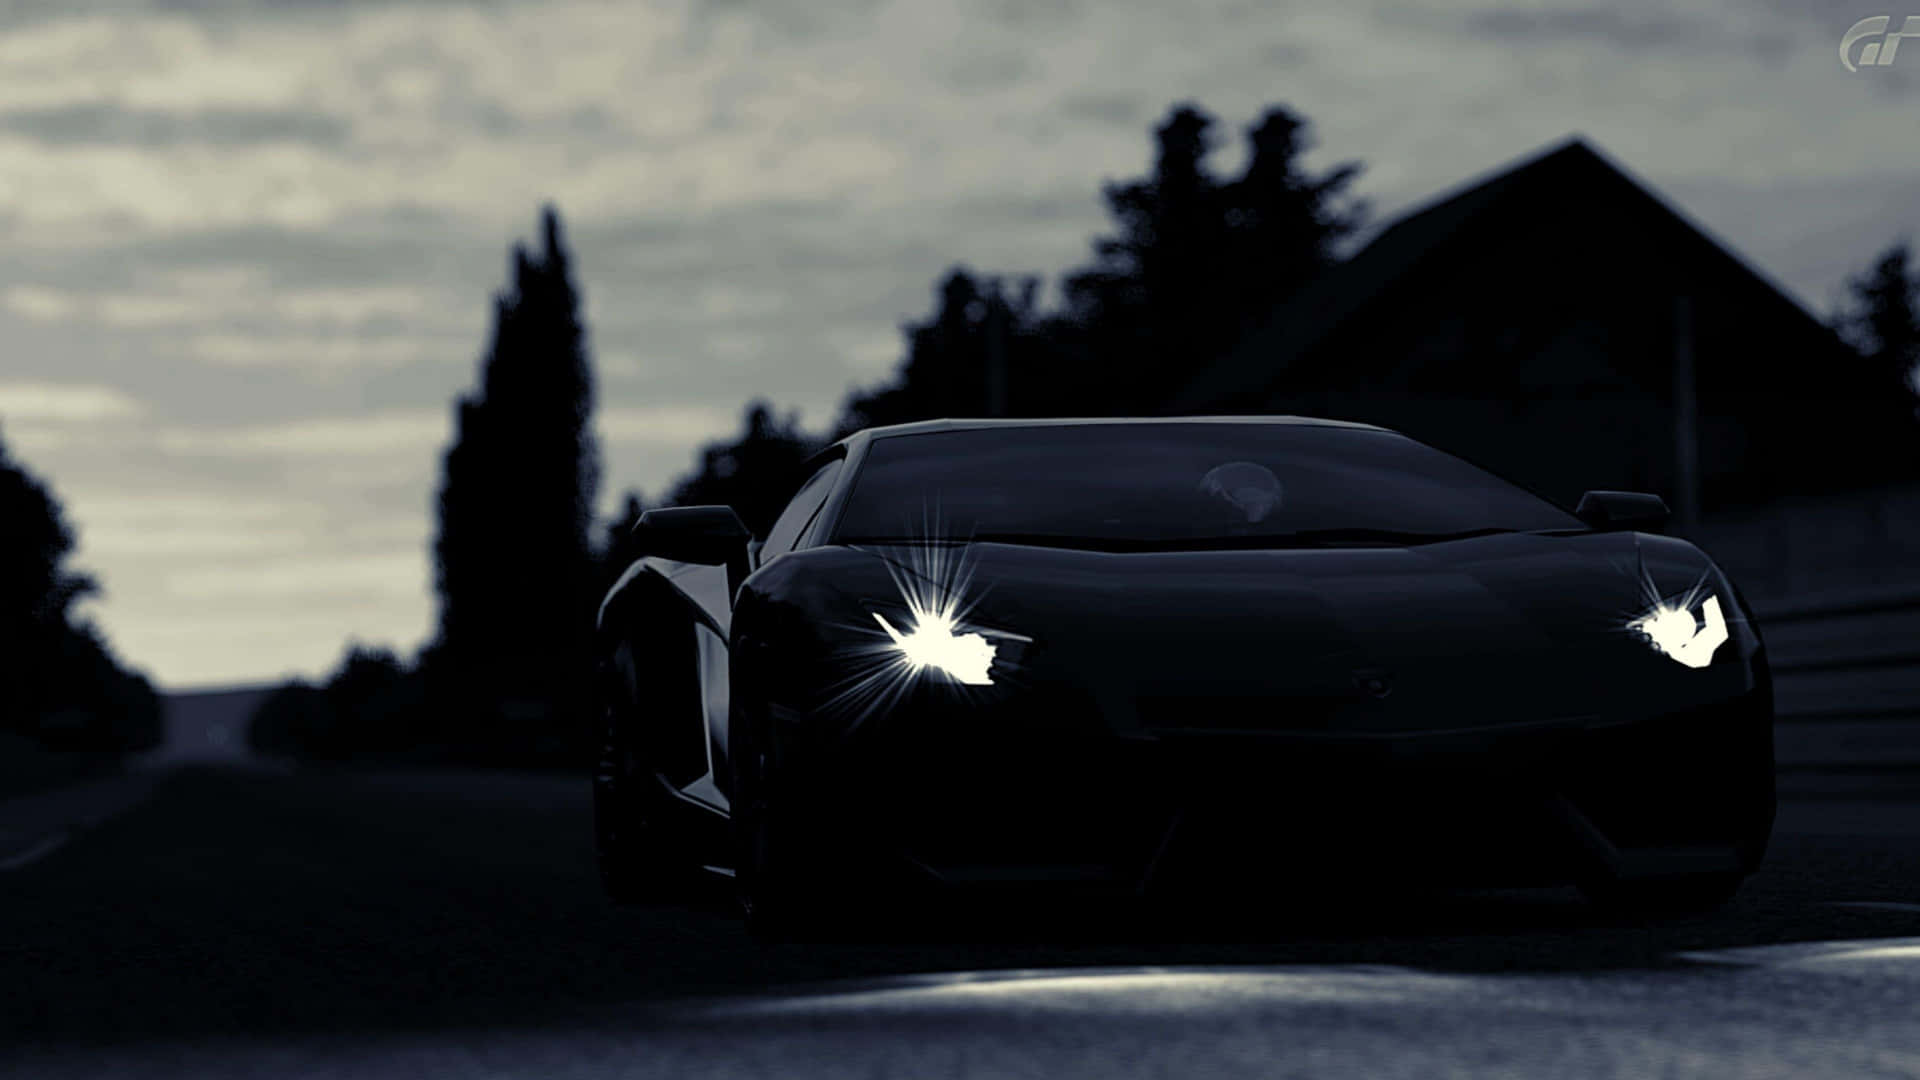 Own the Road in a 4k Lamborghini